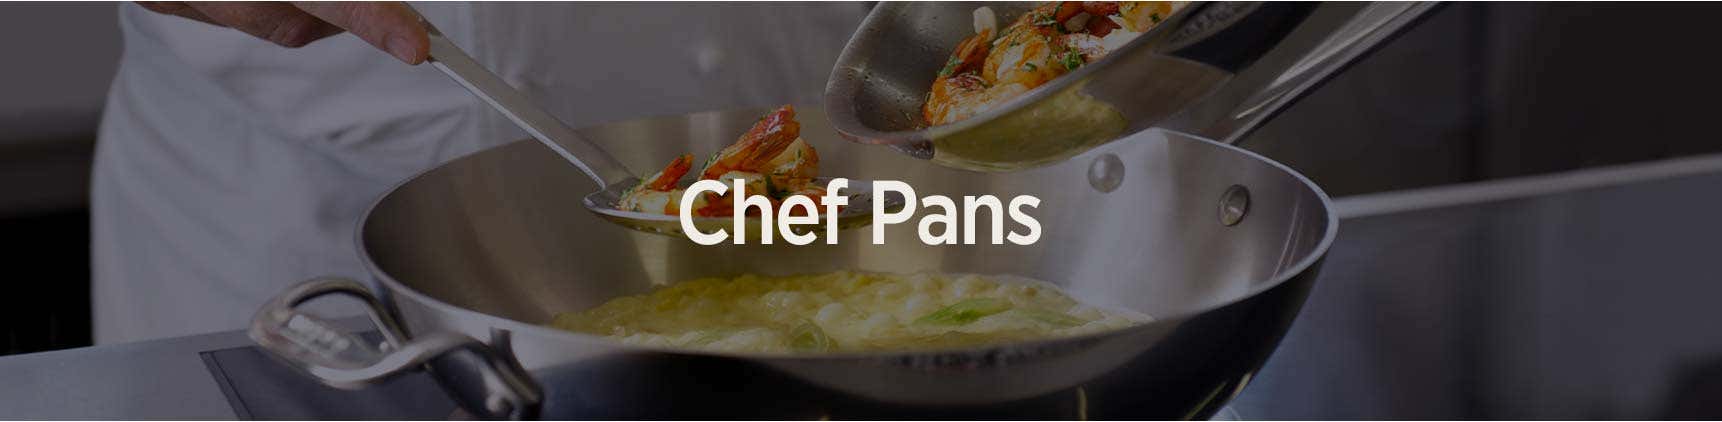 Chef Pans